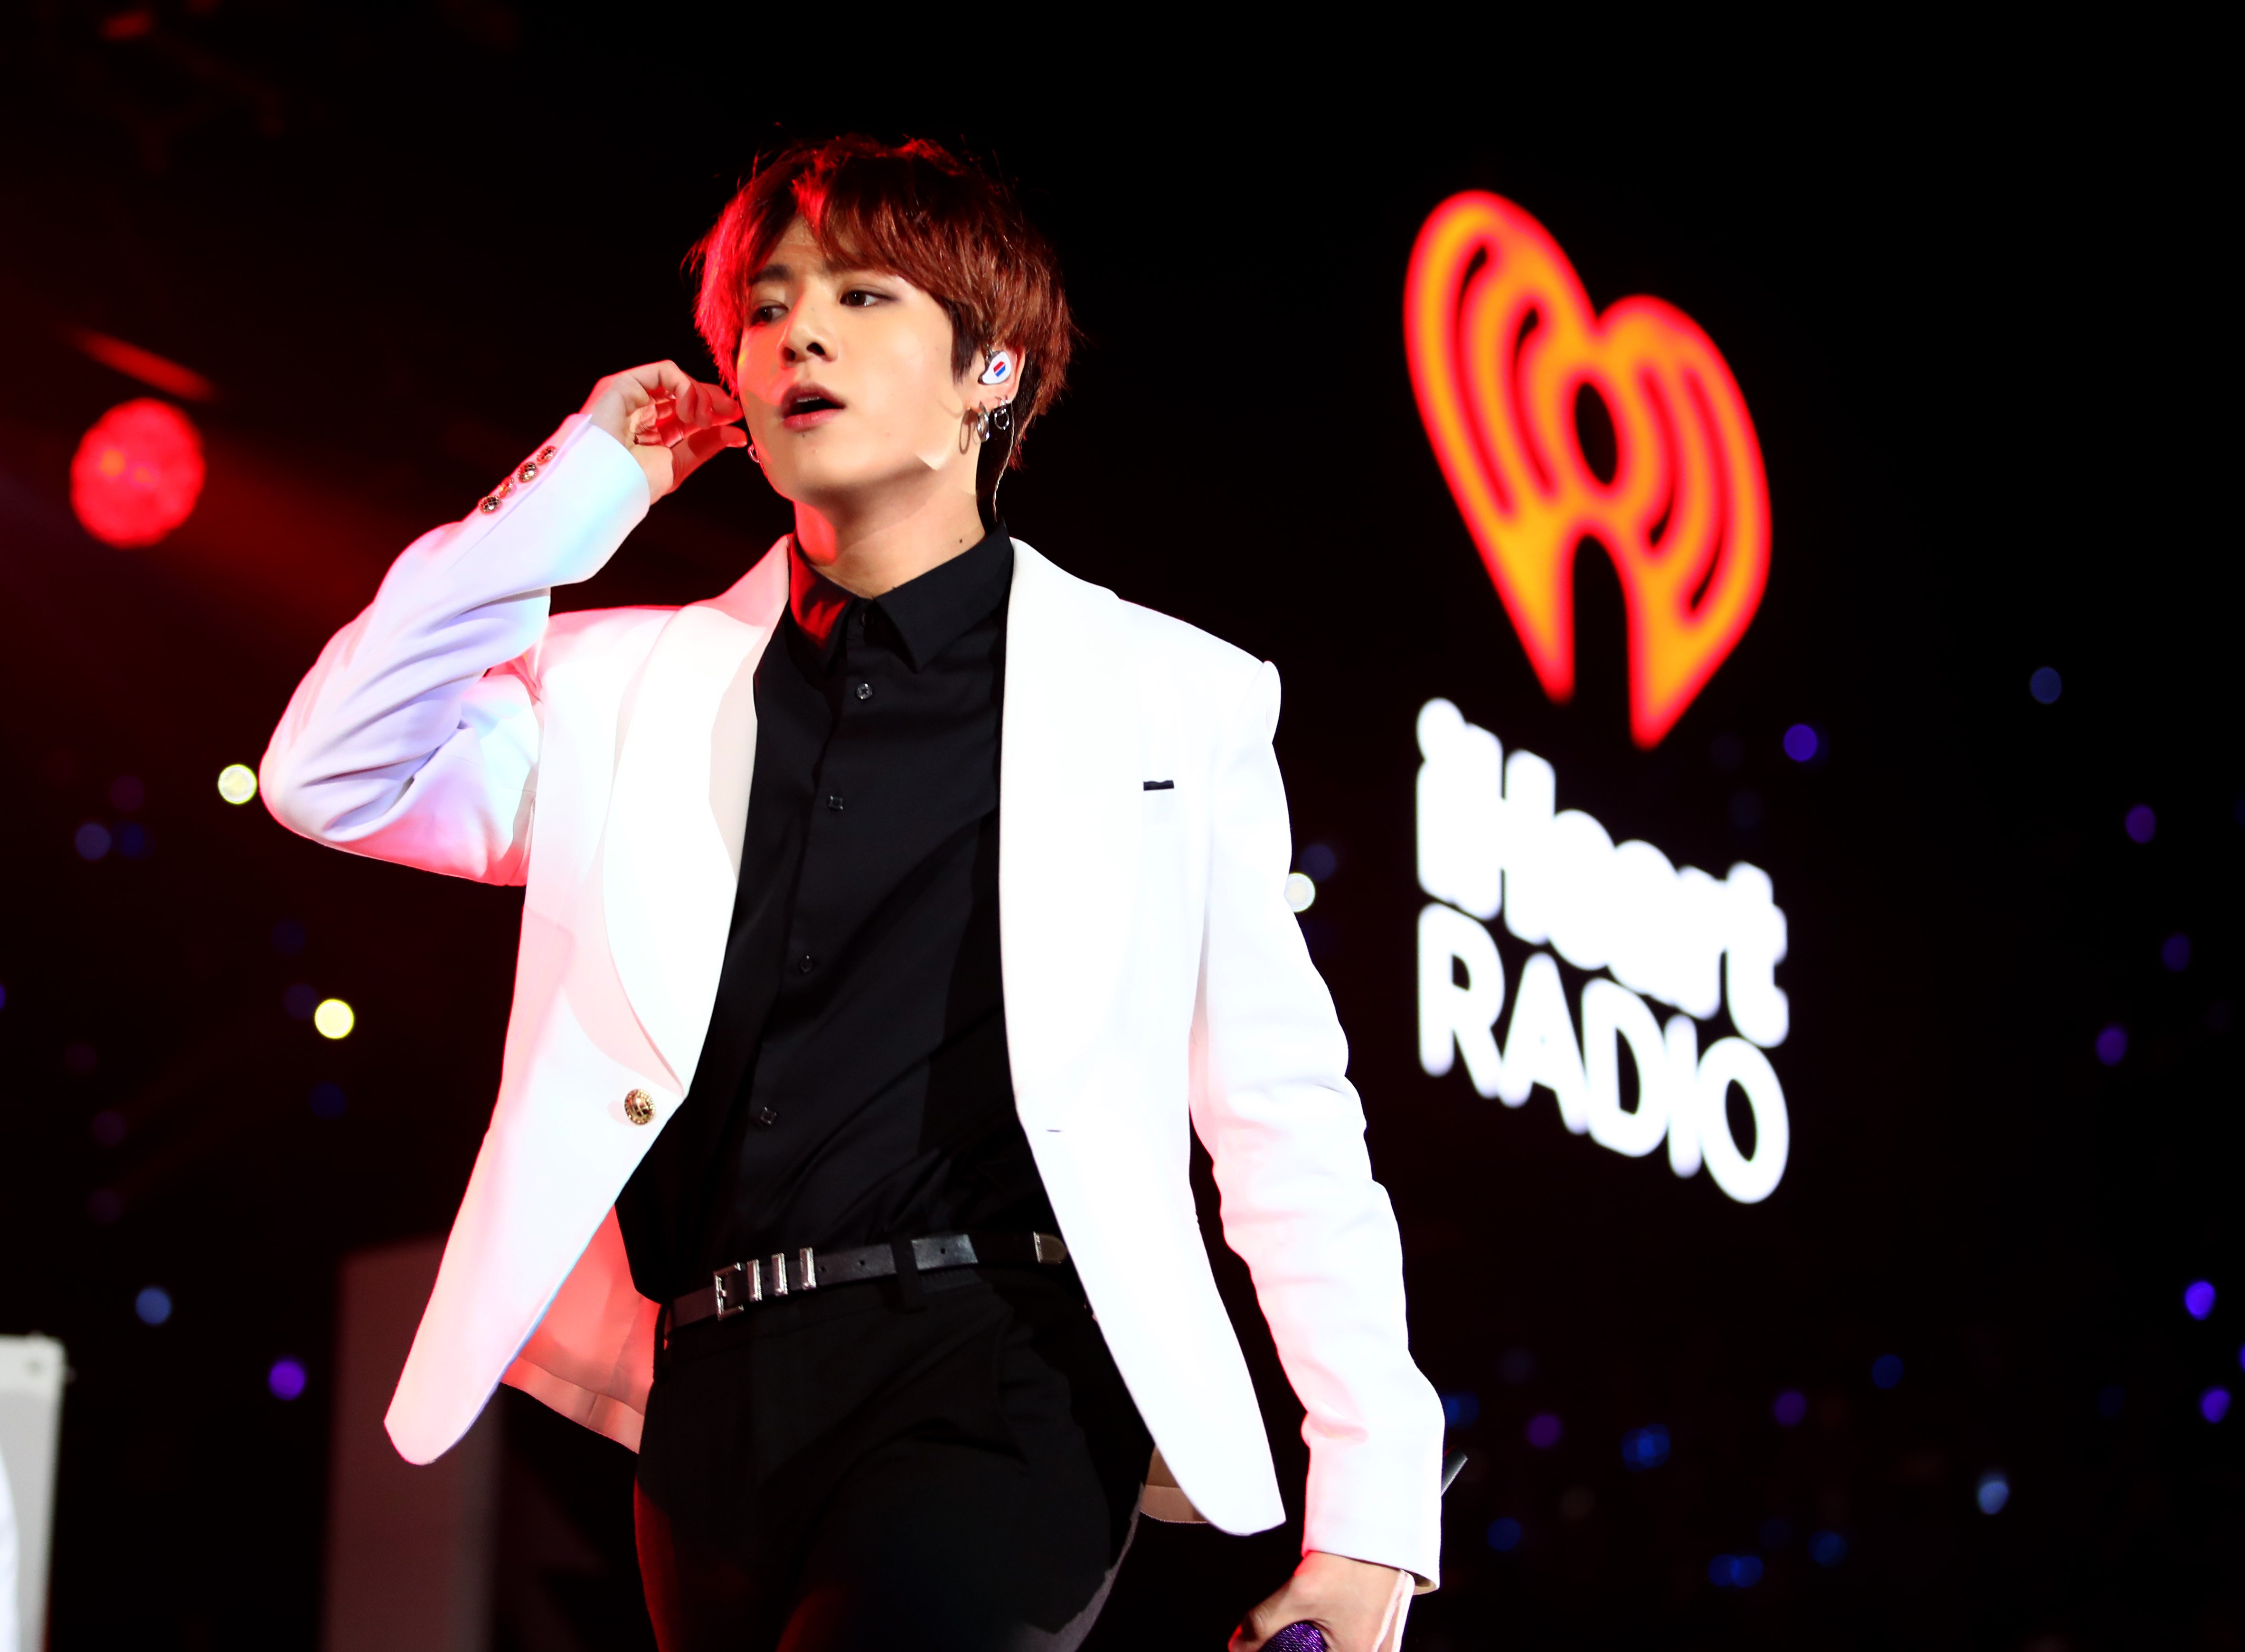 Jungkook of BTS walks onstage during 102.7 KIIS FM's Jingle Ball 2019